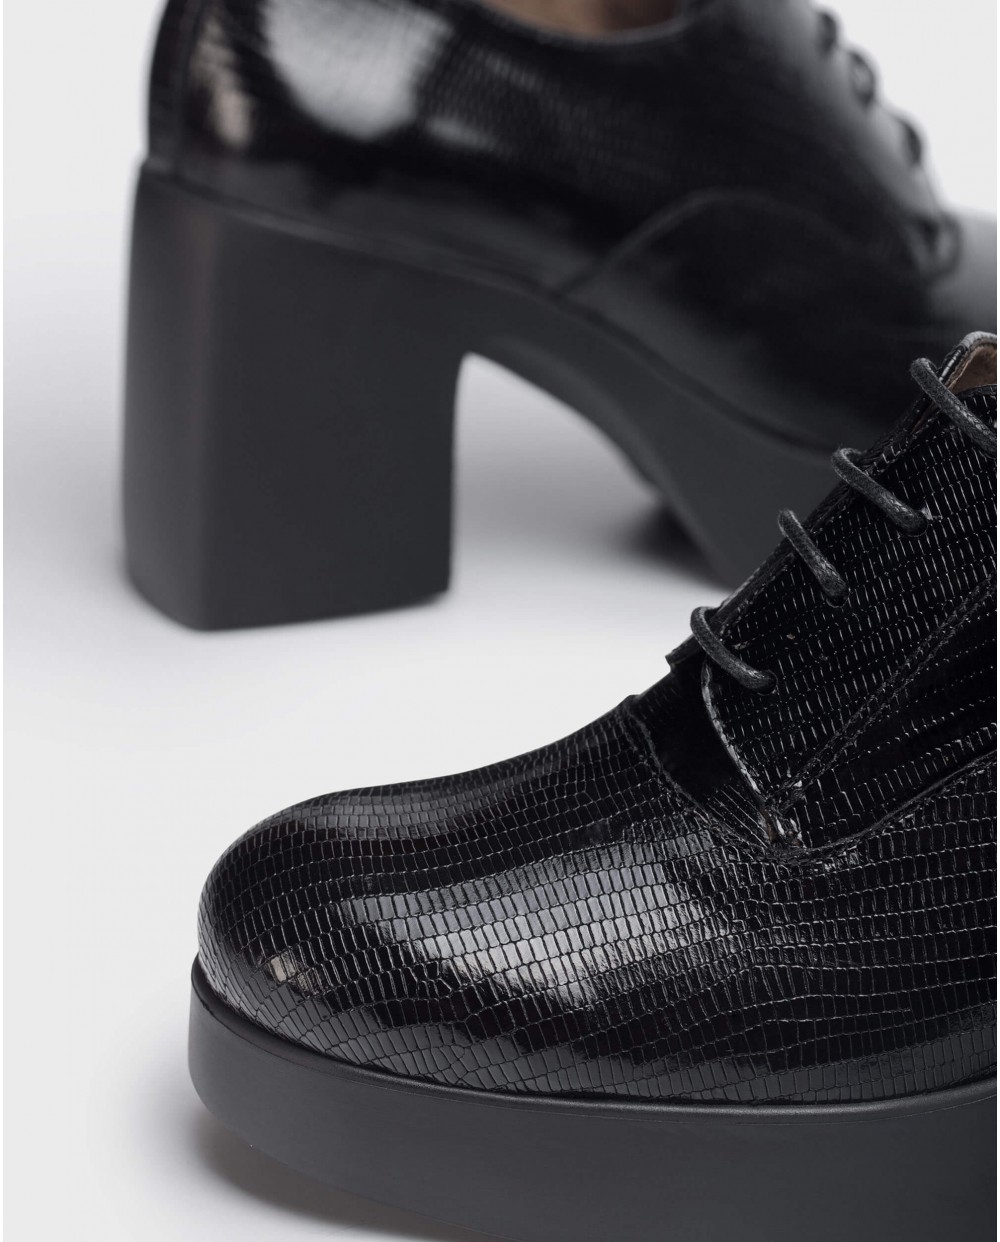 Wonders-NEW IN-Black Loira shoes.